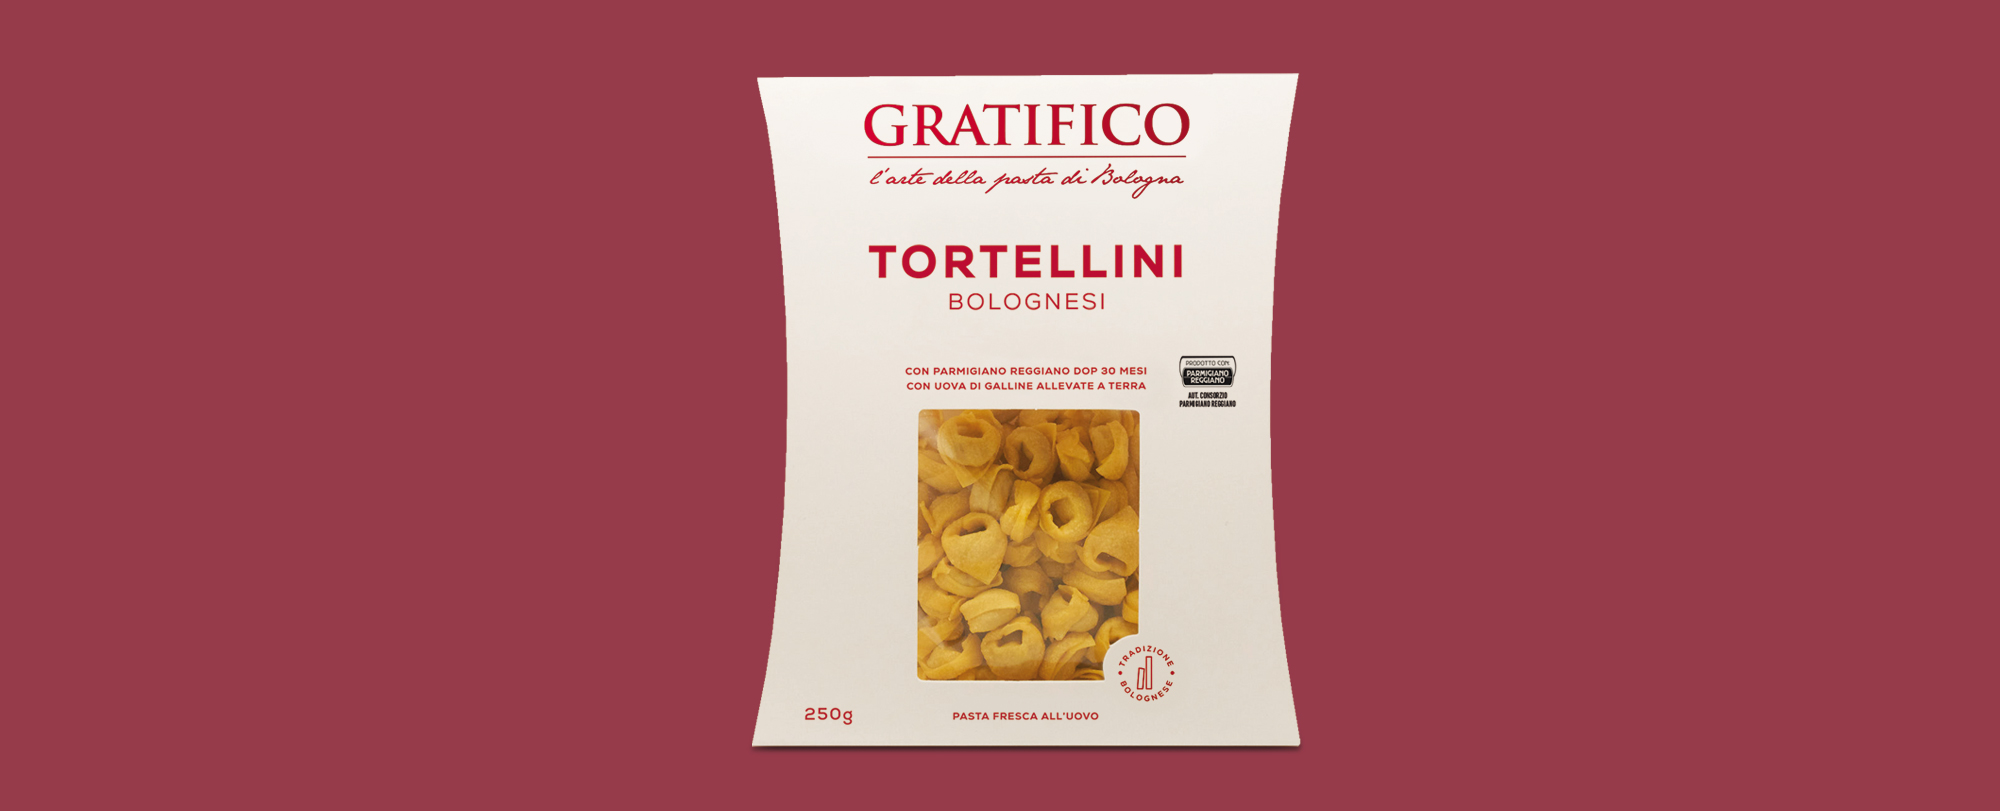 tortellini-pack-mockup